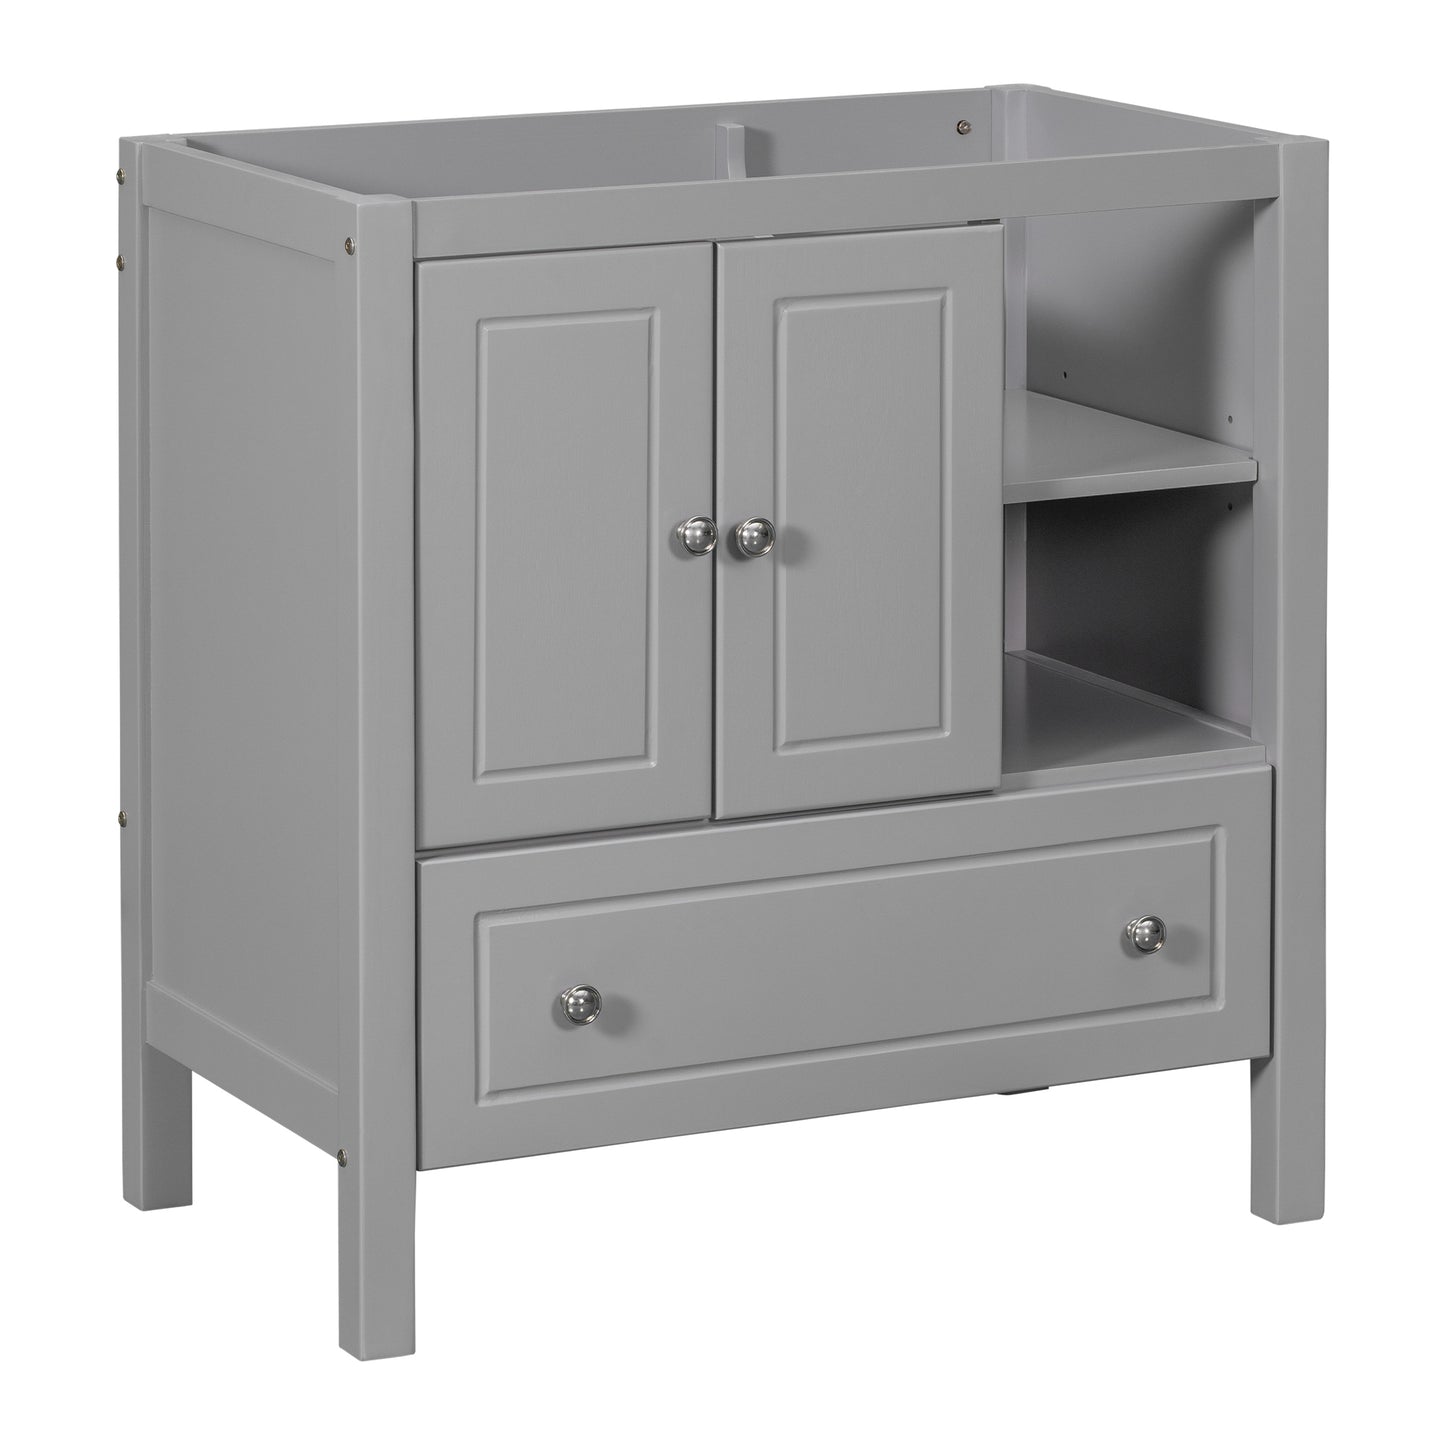 30" Bathroom Vanity Base Only, Solid Wood Frame, Bathroom Storage Cabinet with Doors and Drawers, Grey